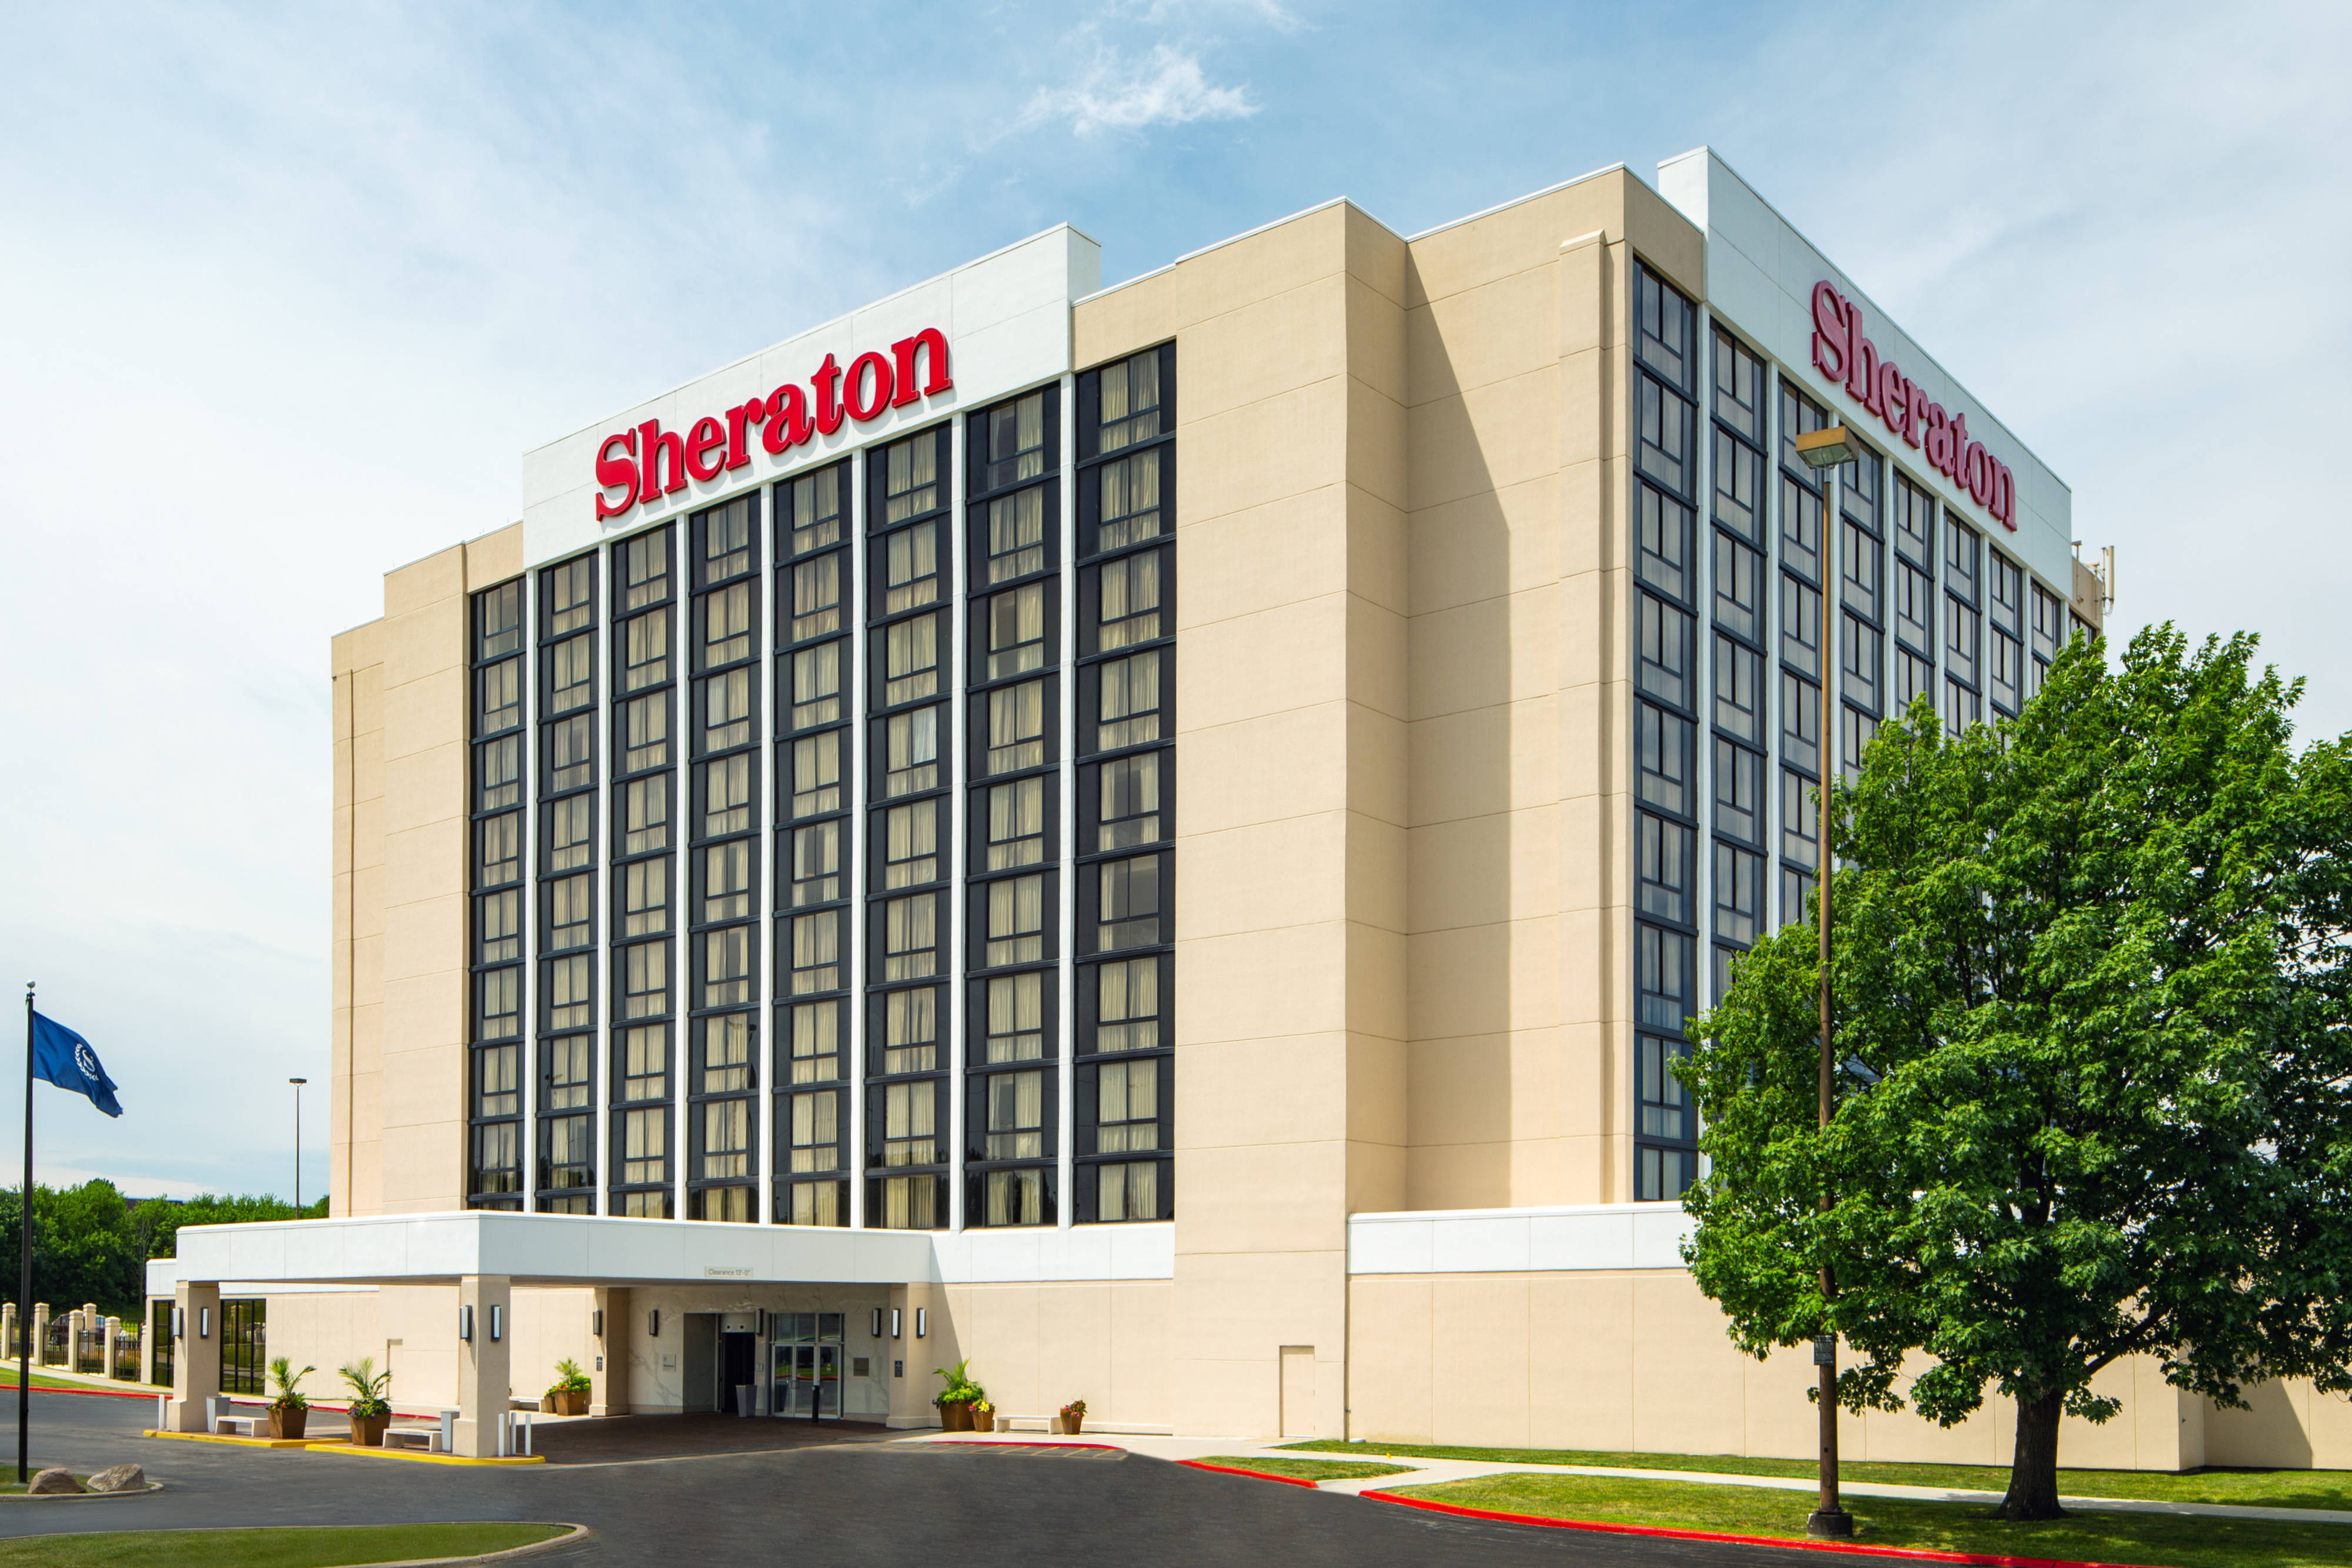 Photo of Sheraton West Des Moines Hotel, West Des Moines, IA